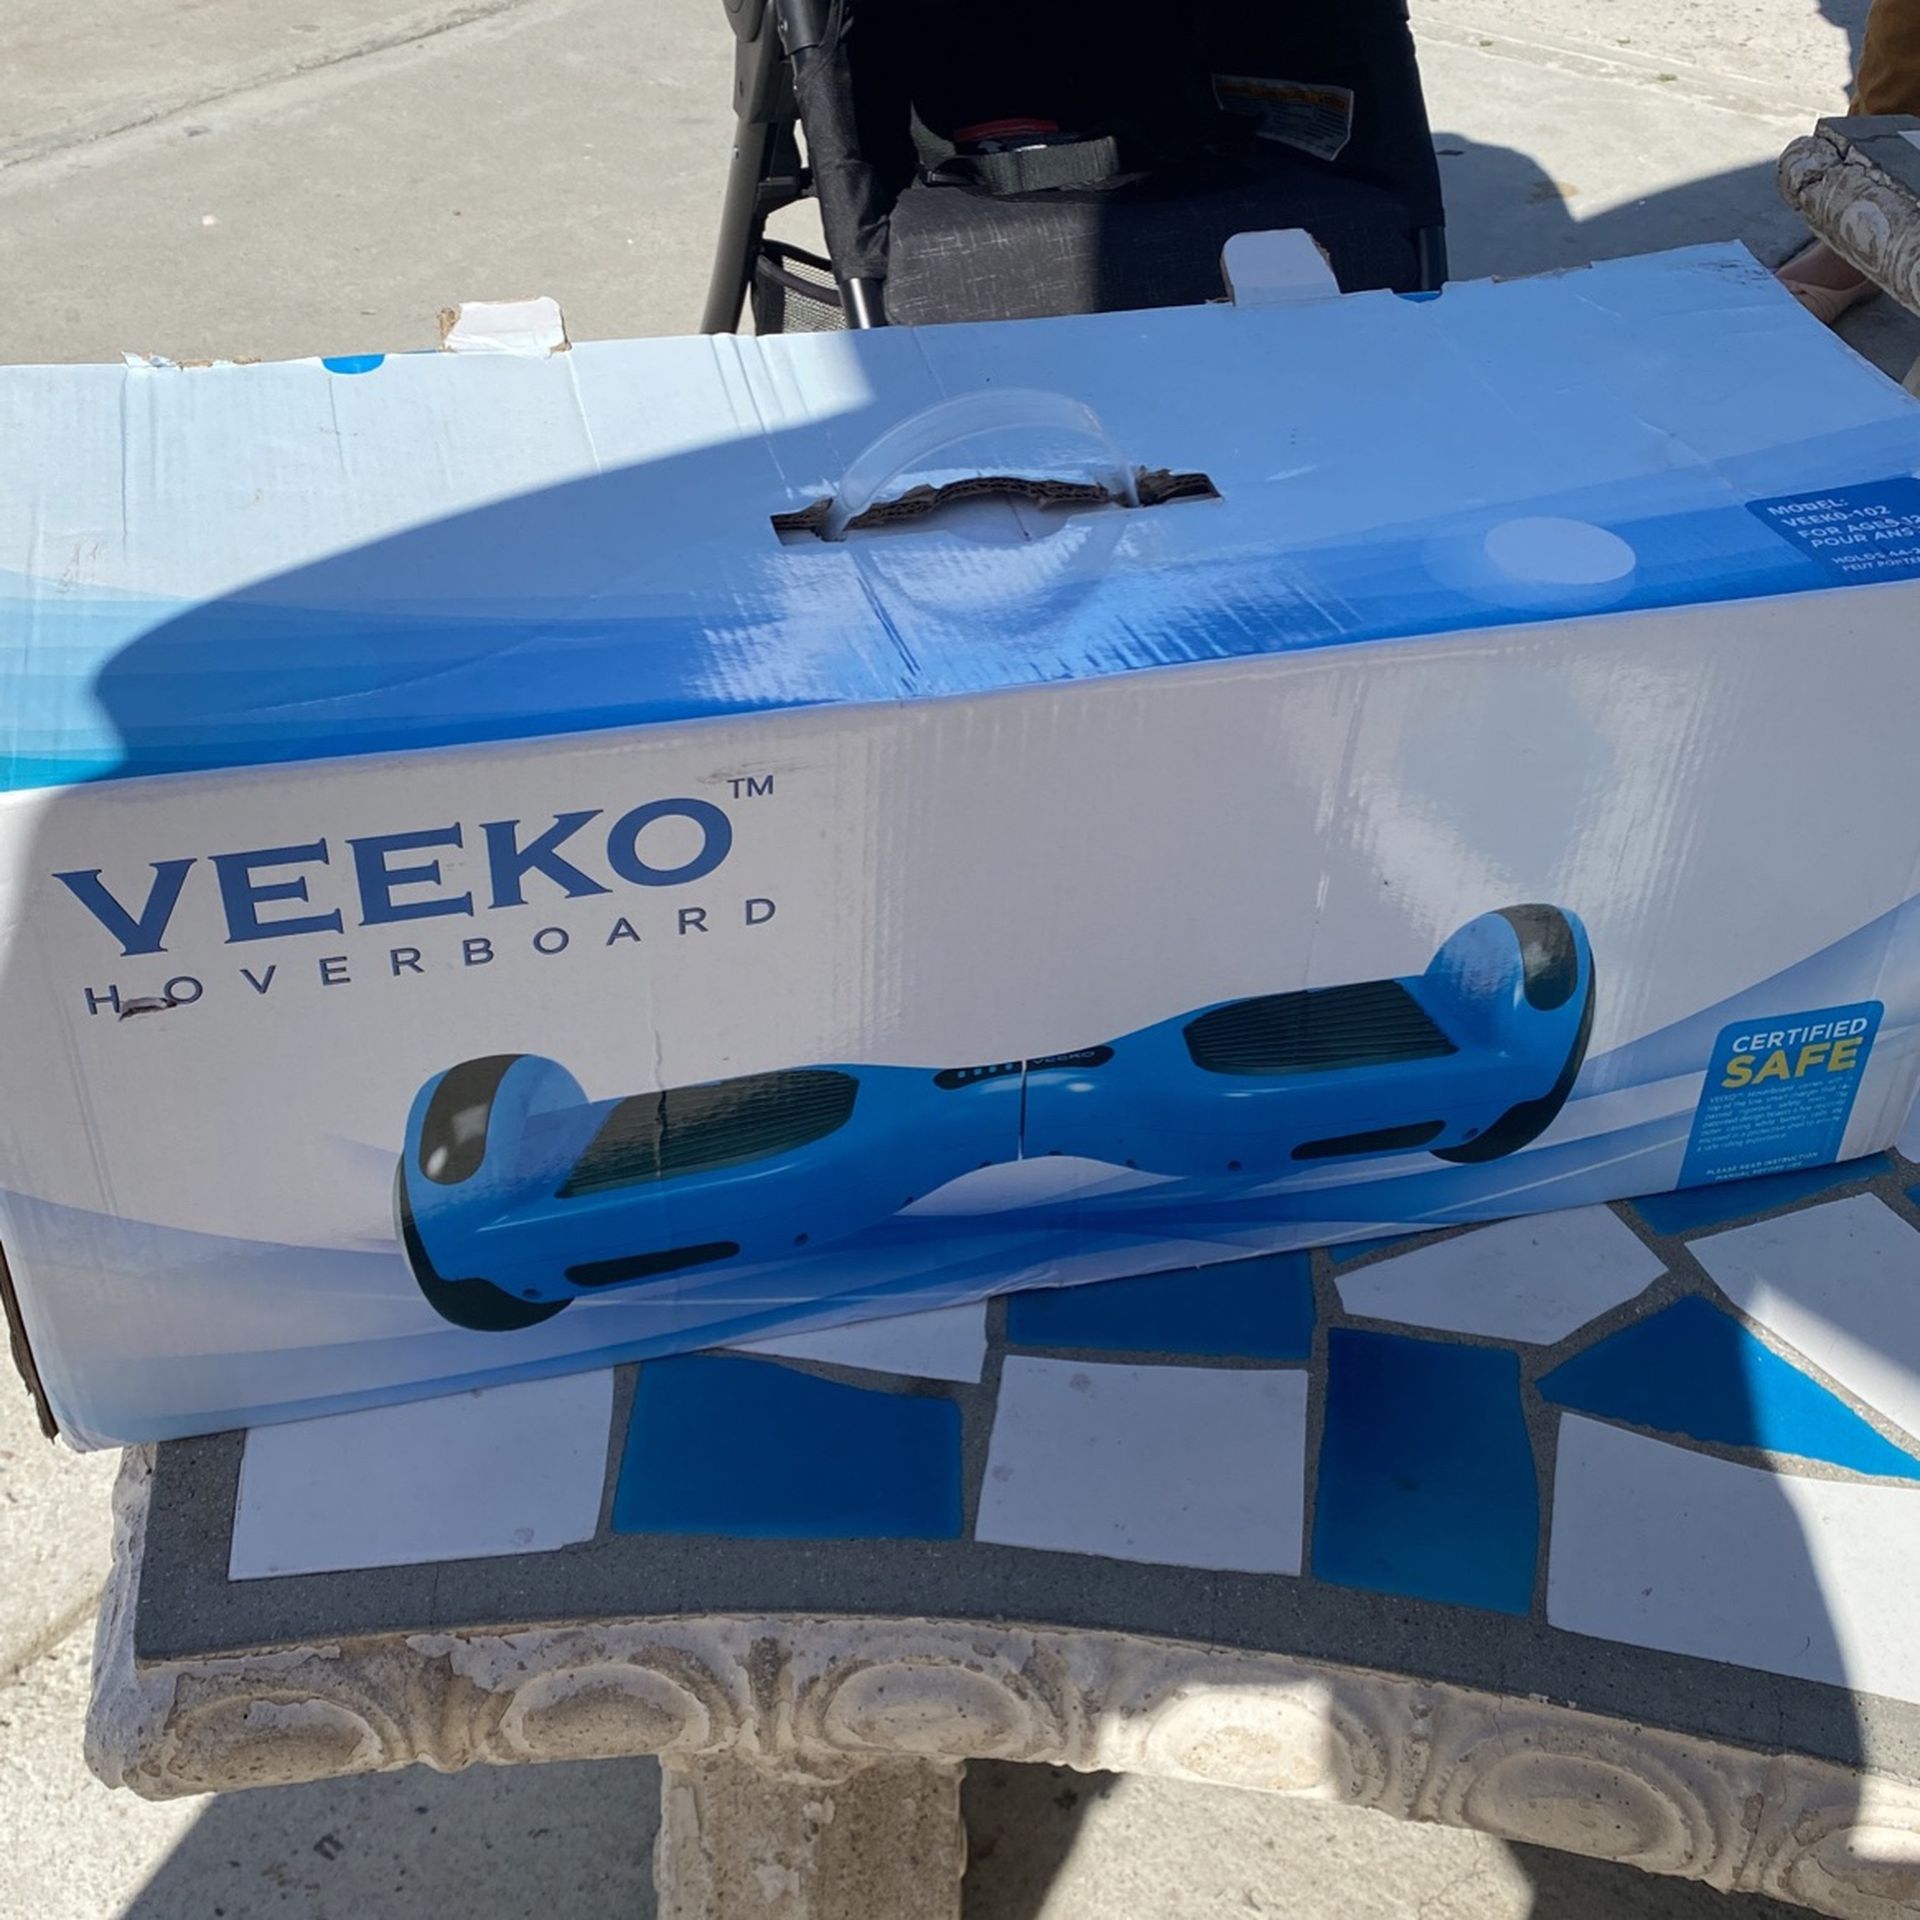 Veeko Hoverboard $45 